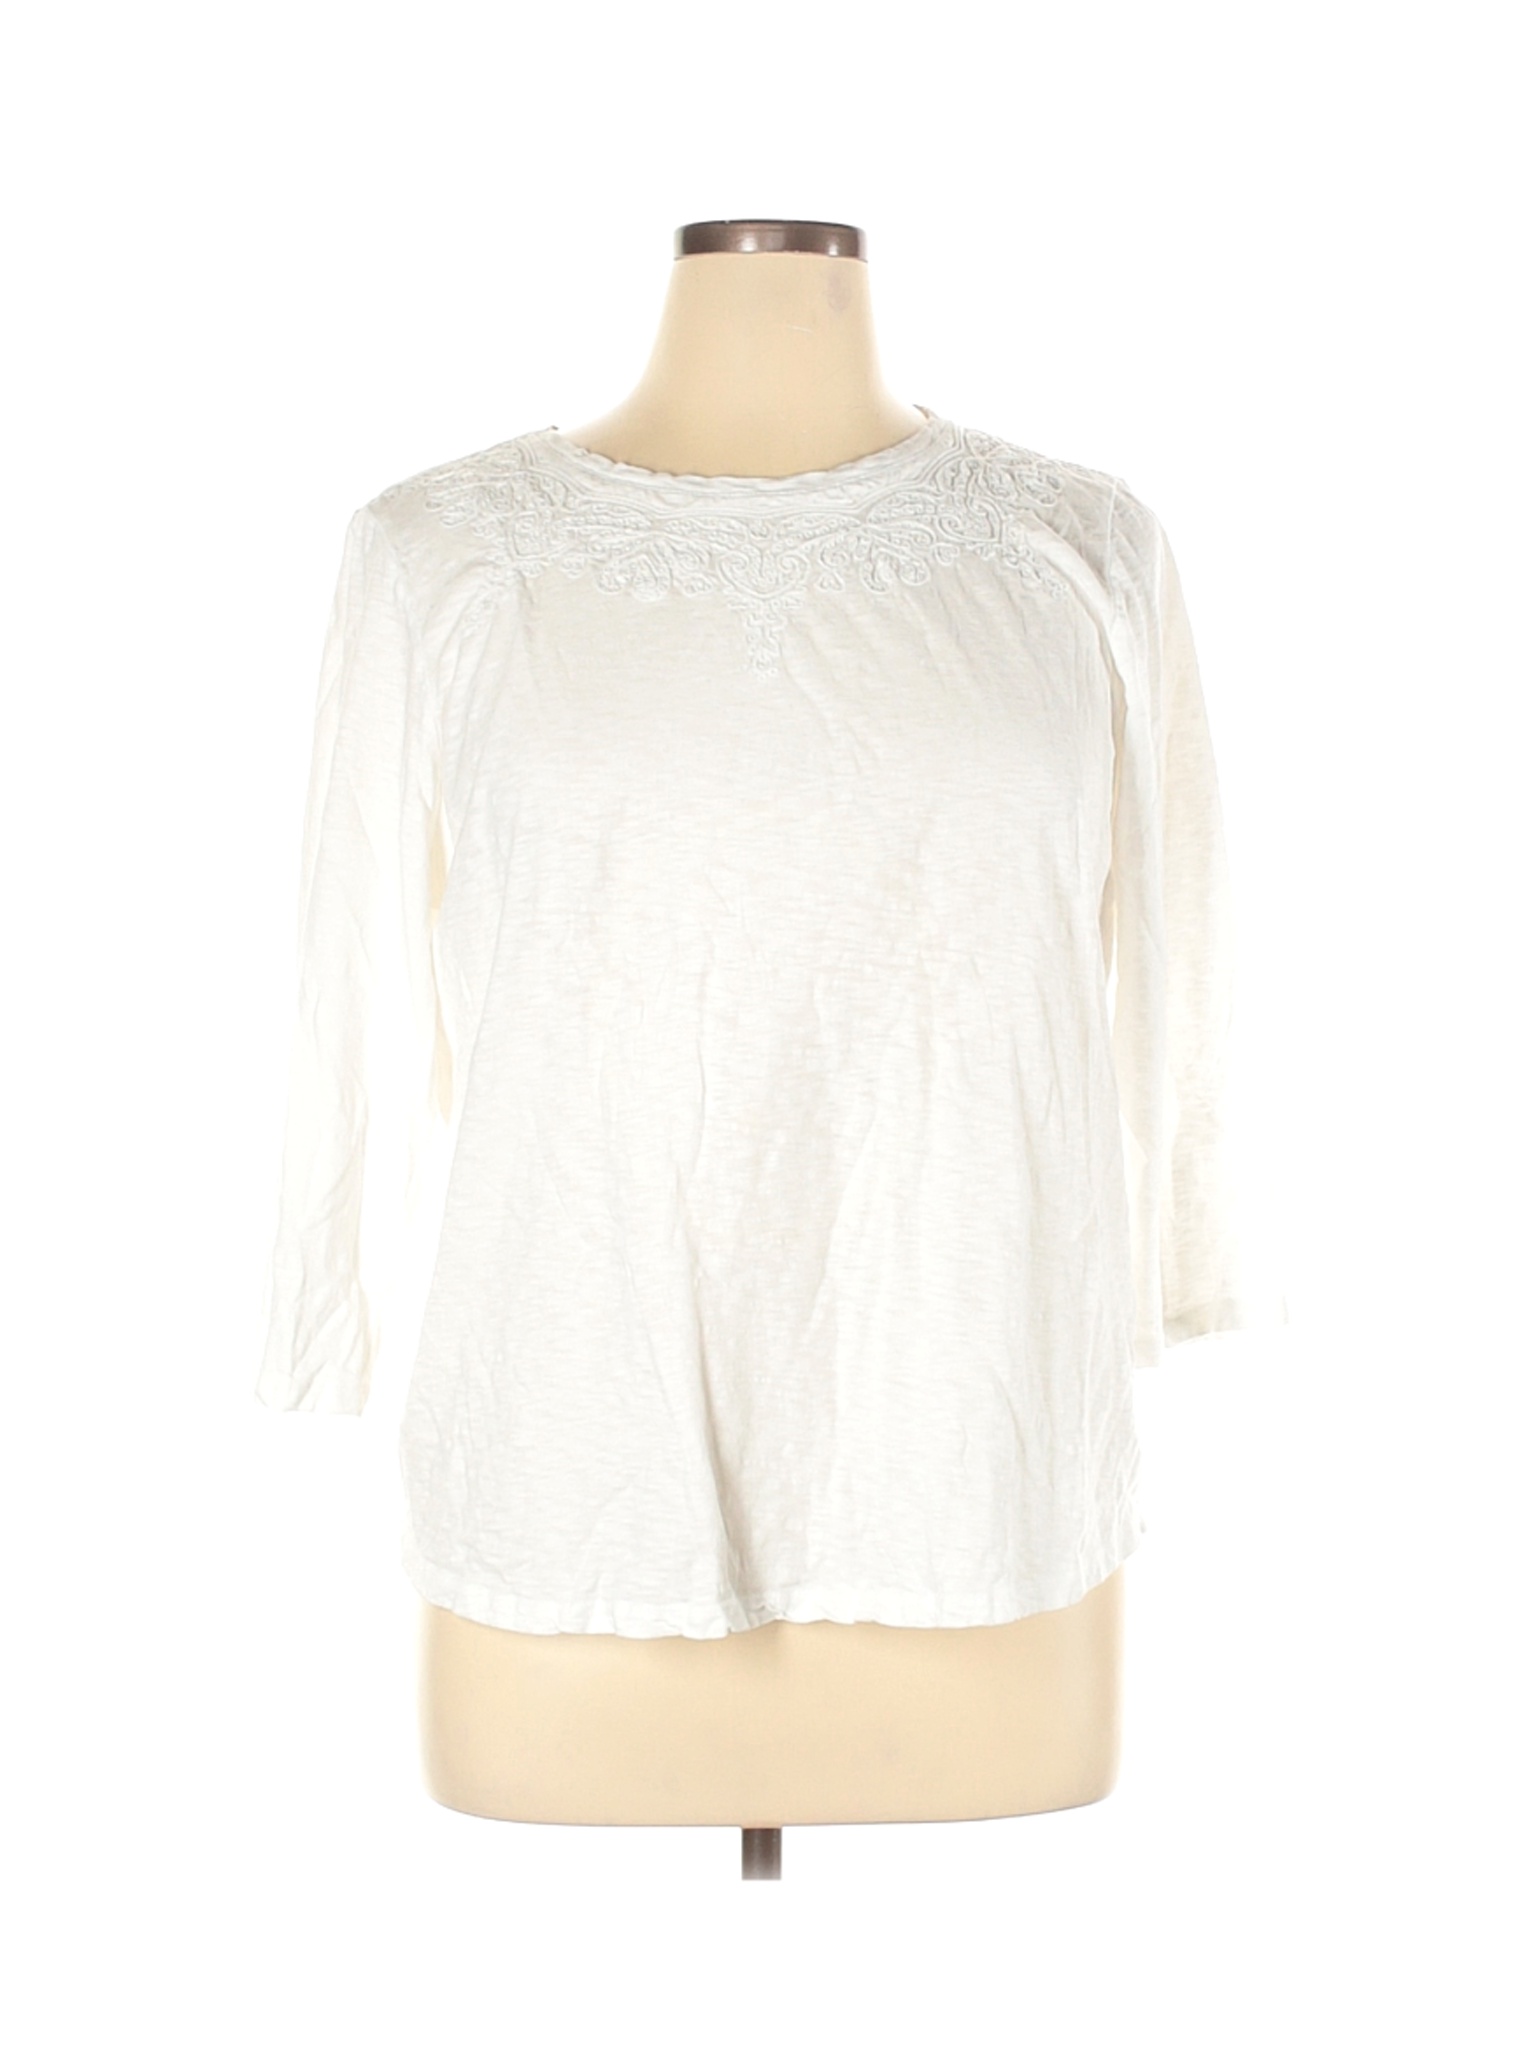 Chico's Women White 3/4 Sleeve Top XL | eBay